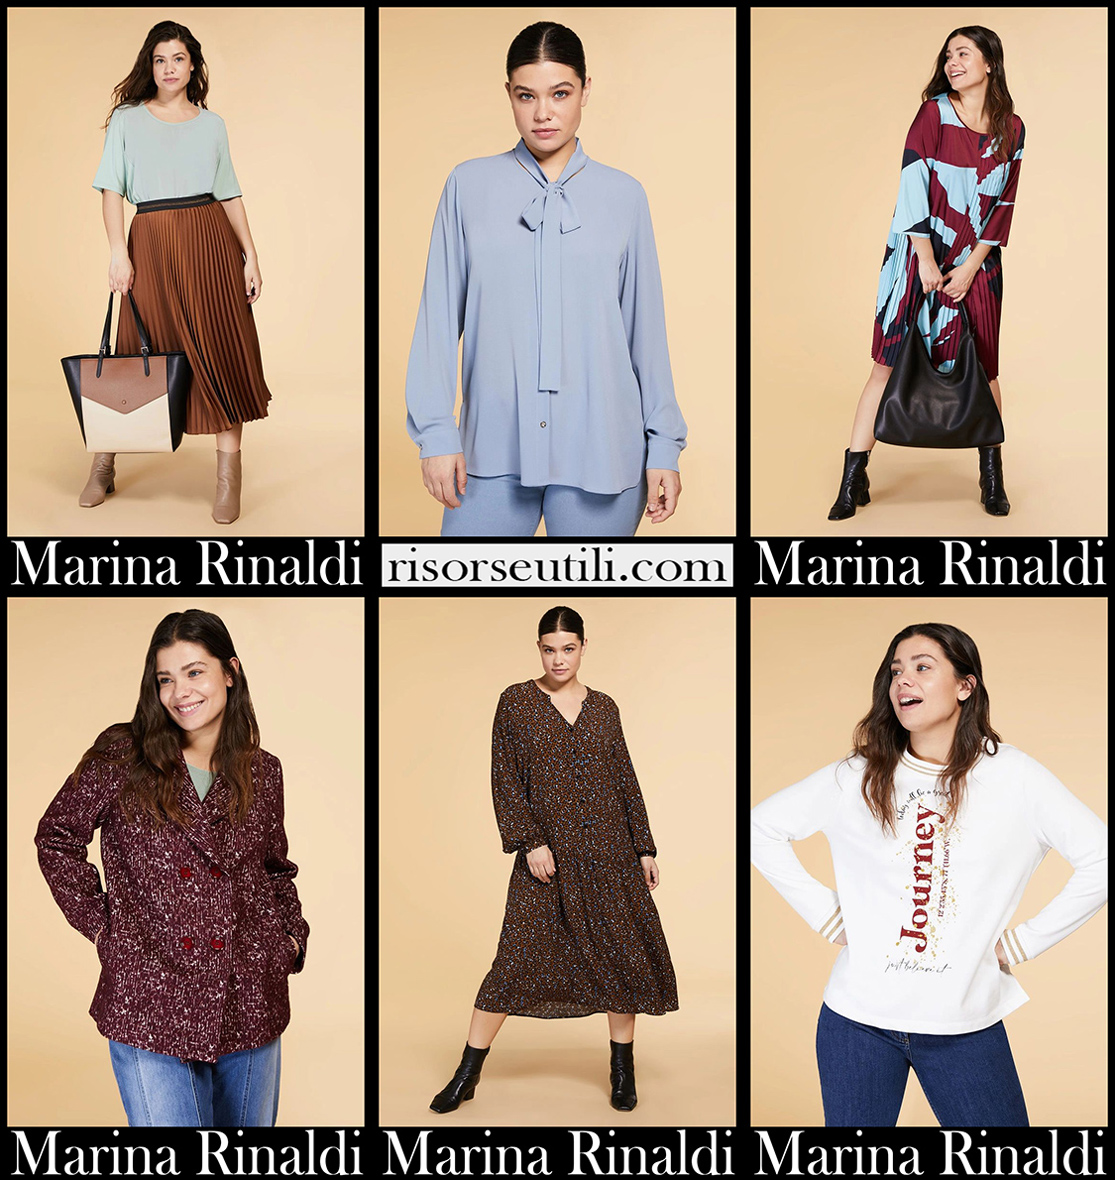 Curvy Marina Rinaldi plus size clothing womens fashion